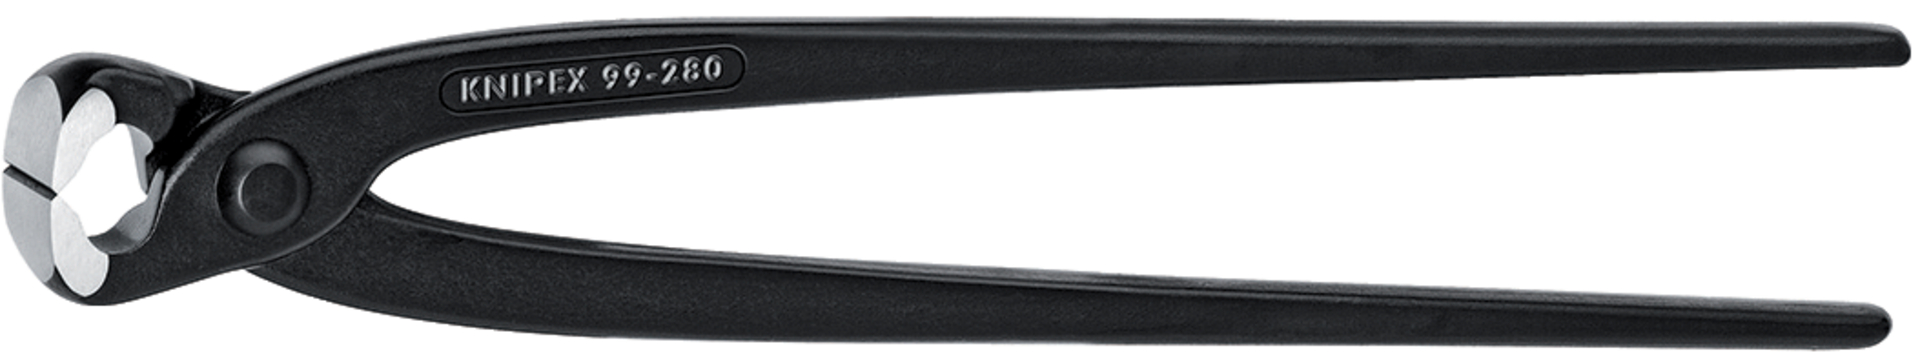 KNIPEX 99 00 220 EAN Monierzange (Rabitzzange) schwarz atra. 220 mm